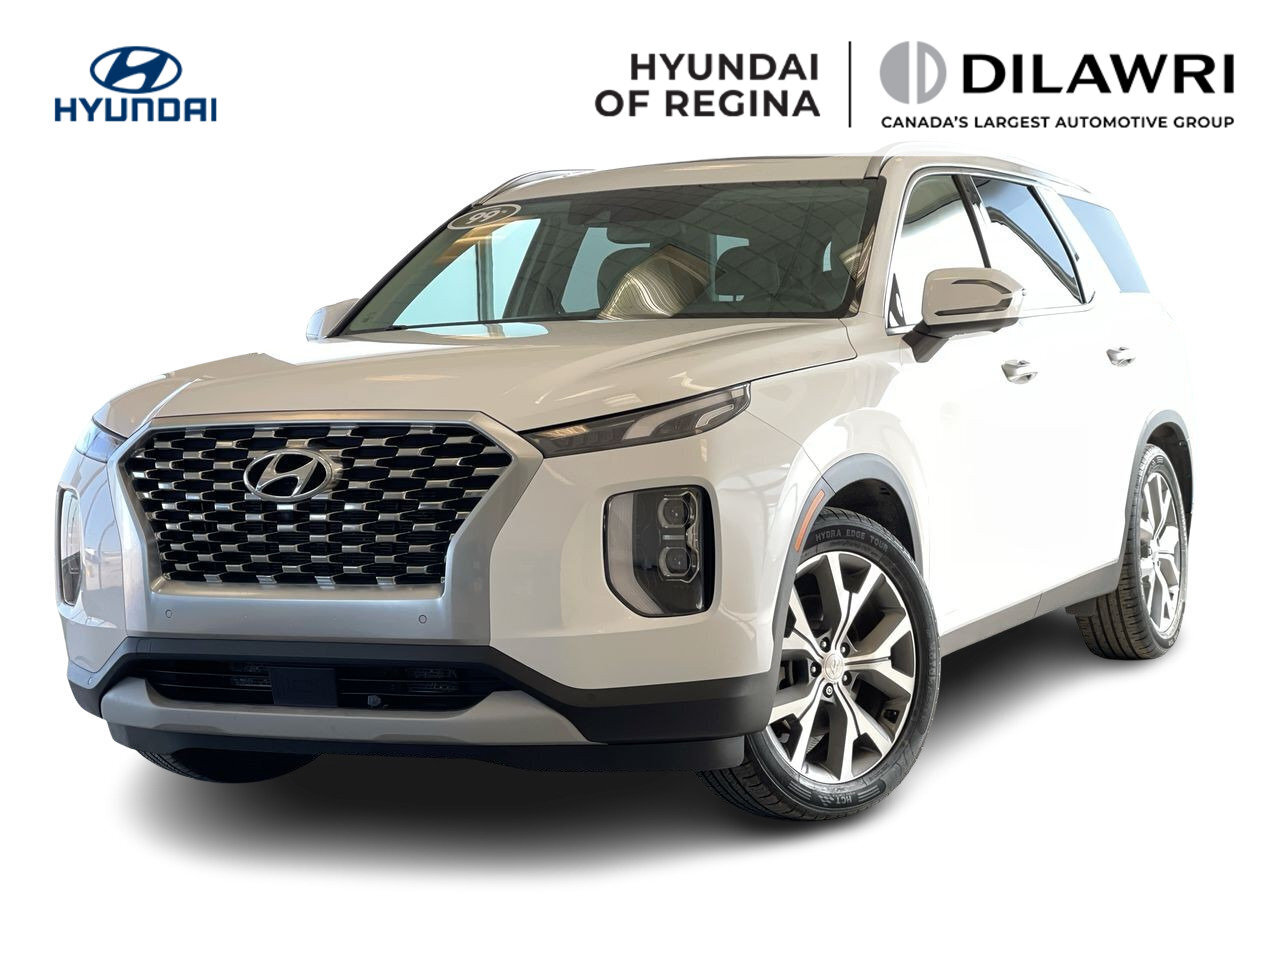 2021 Hyundai Palisade AWD Luxury 8 Passenger CPO, Leather, Navigation, L